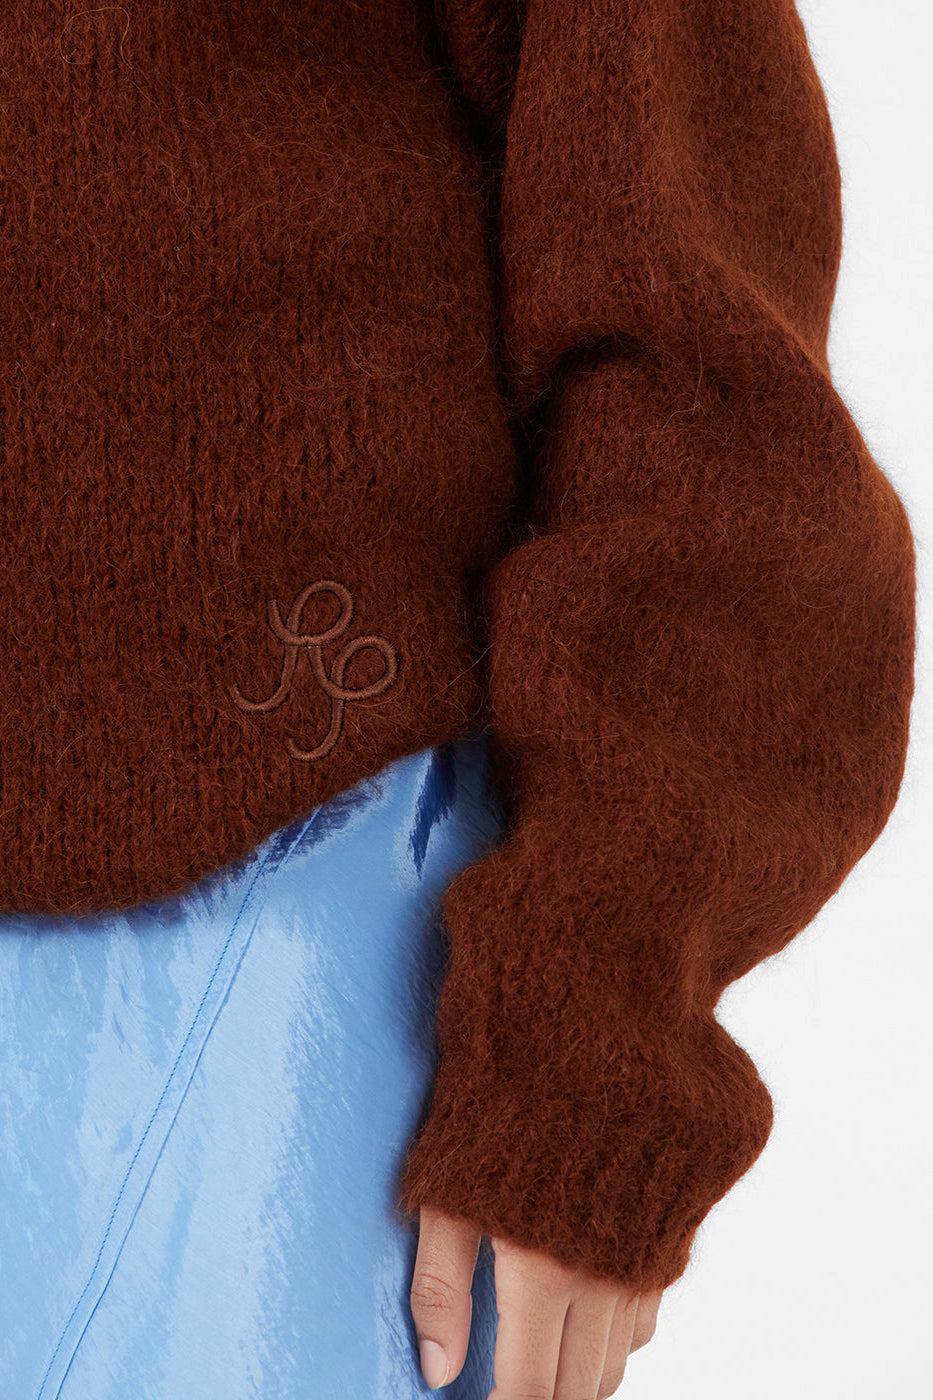 Toni Sweater in Brown Alpaca Blend by Rejina Pyo http://www.shoprecital.com